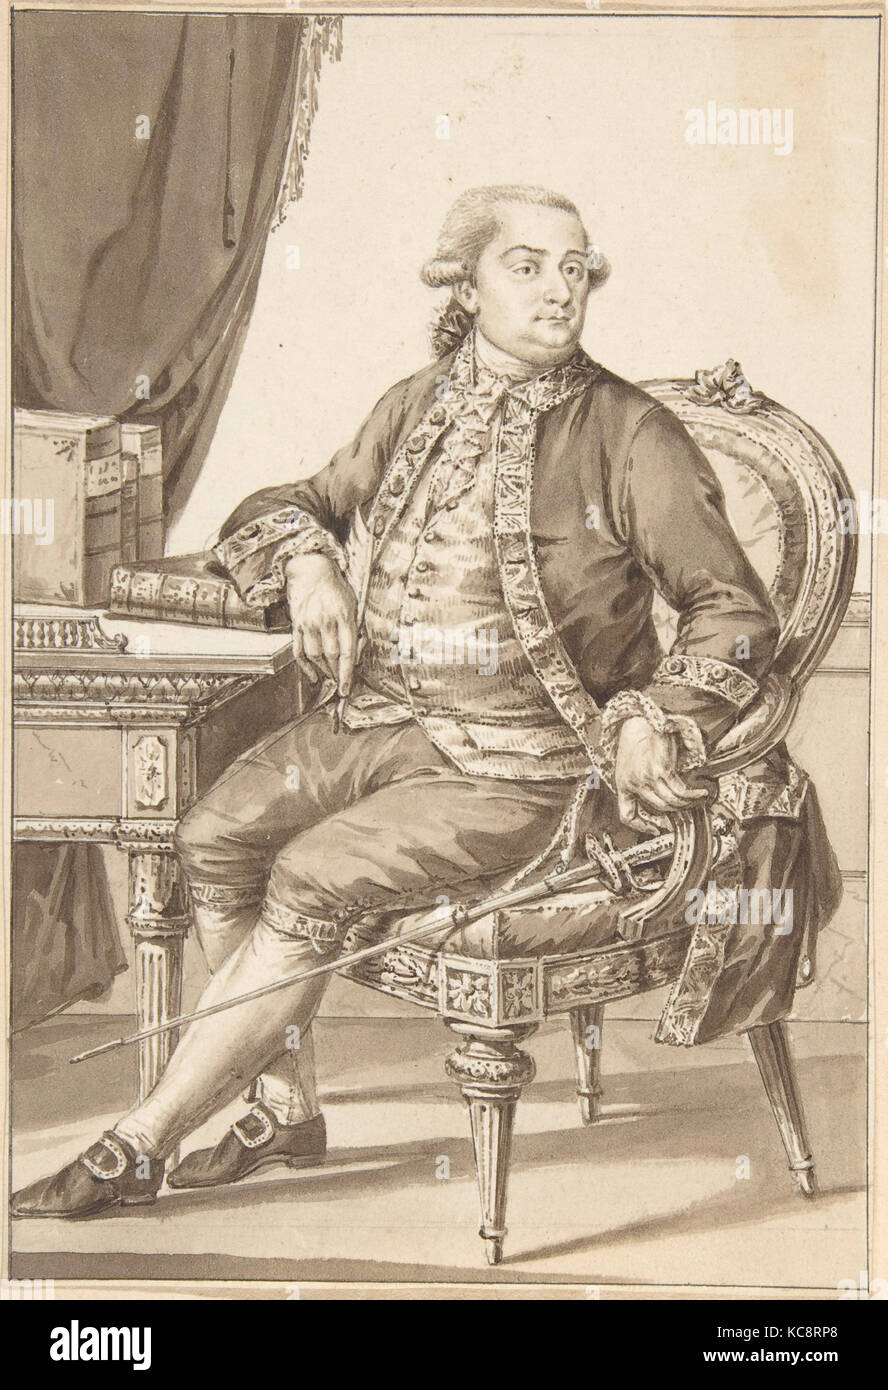 Portrait of Cesare Bonesana, Marchese di Beccaria, Jean-Baptiste-François Bosio, n.d Stock Photo